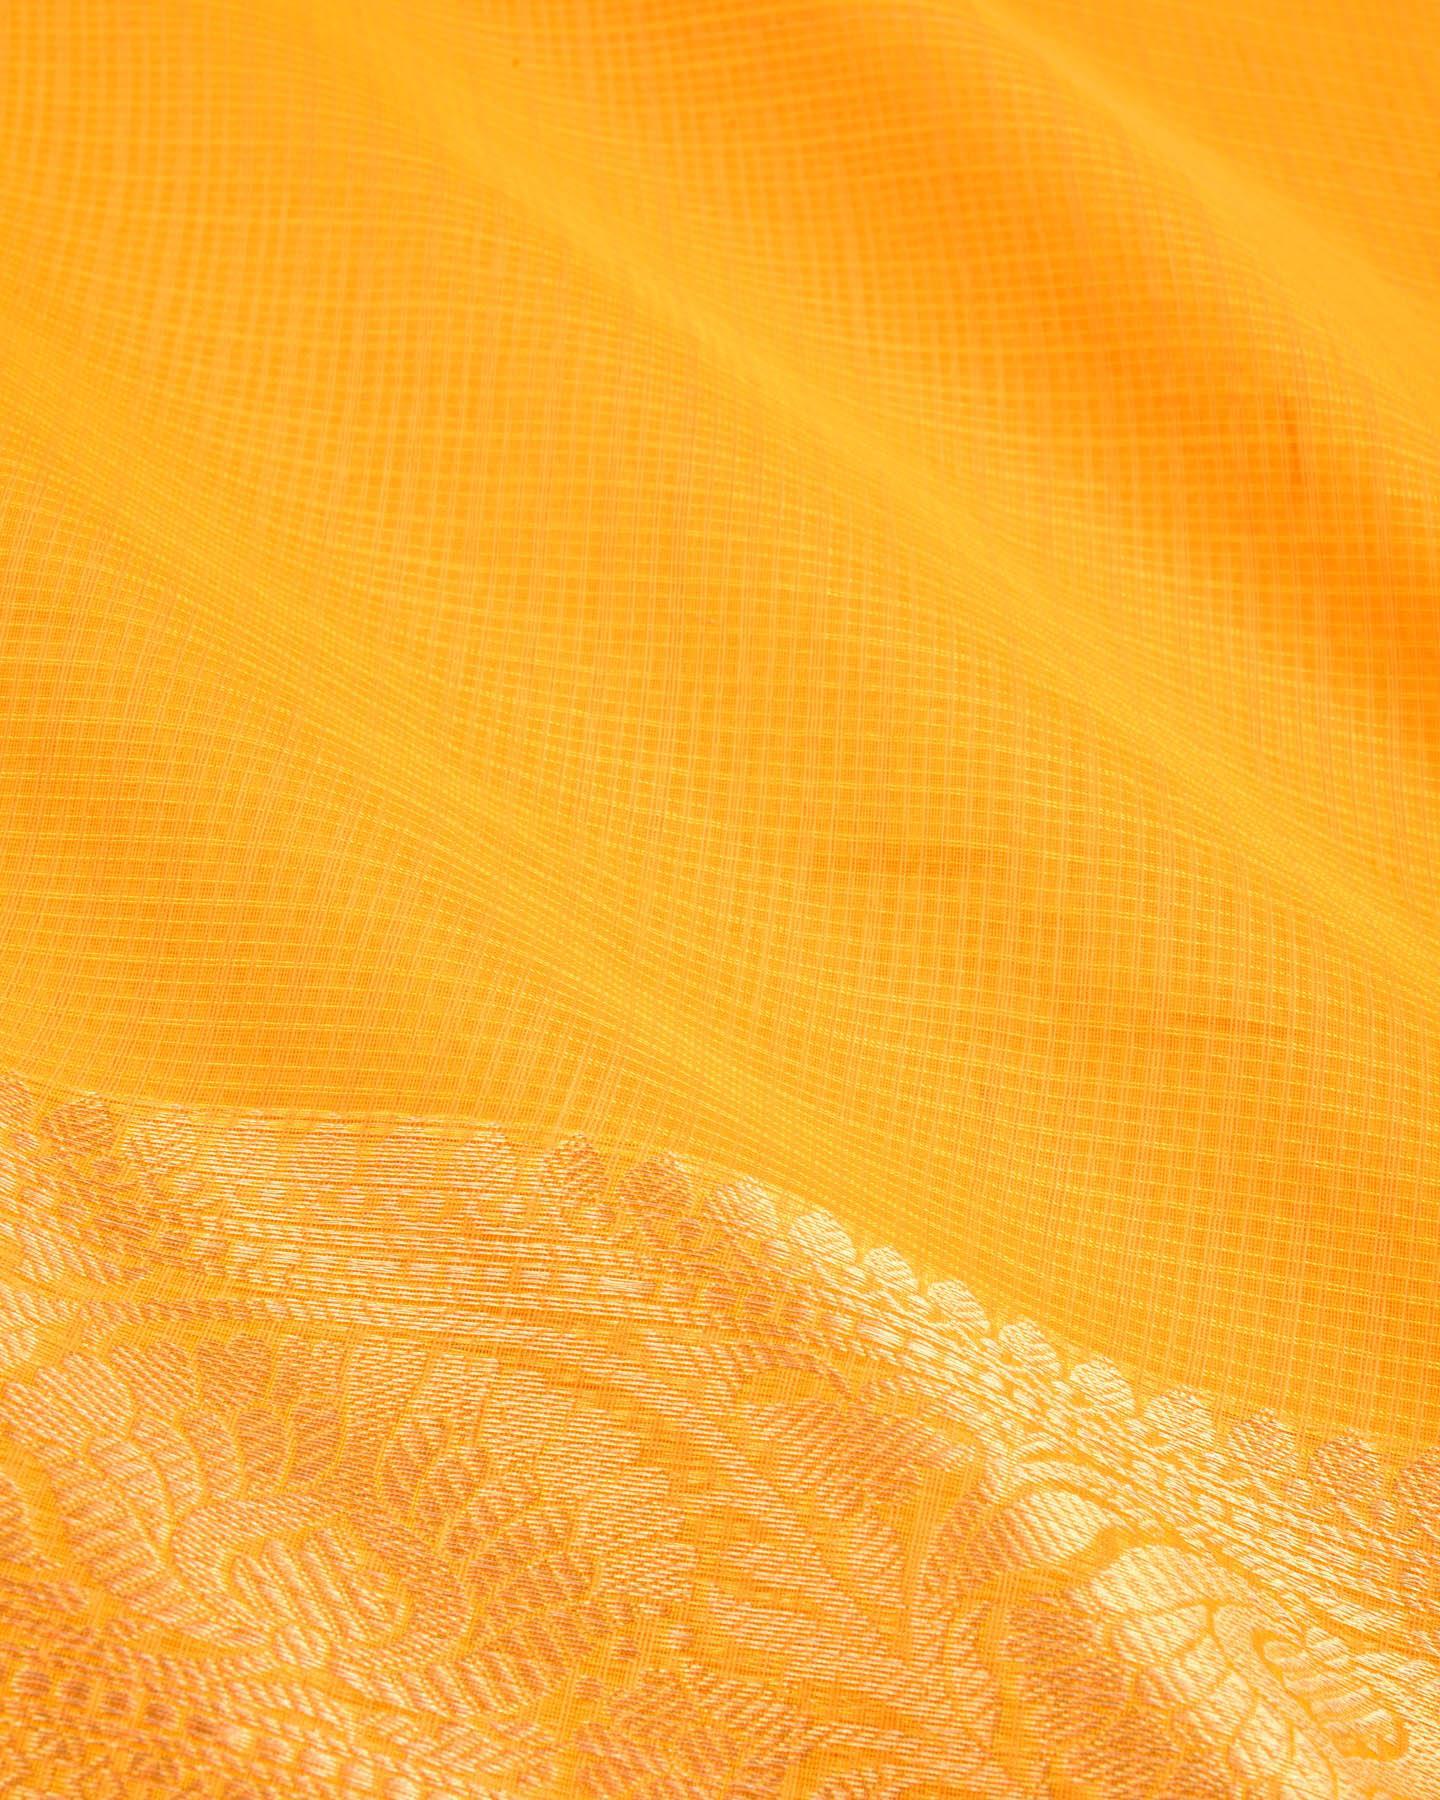 Marigold Yellow Banarasi Kota Check Zari Border Brocade Woven Blended Cotton Silk Saree - By HolyWeaves, Benares